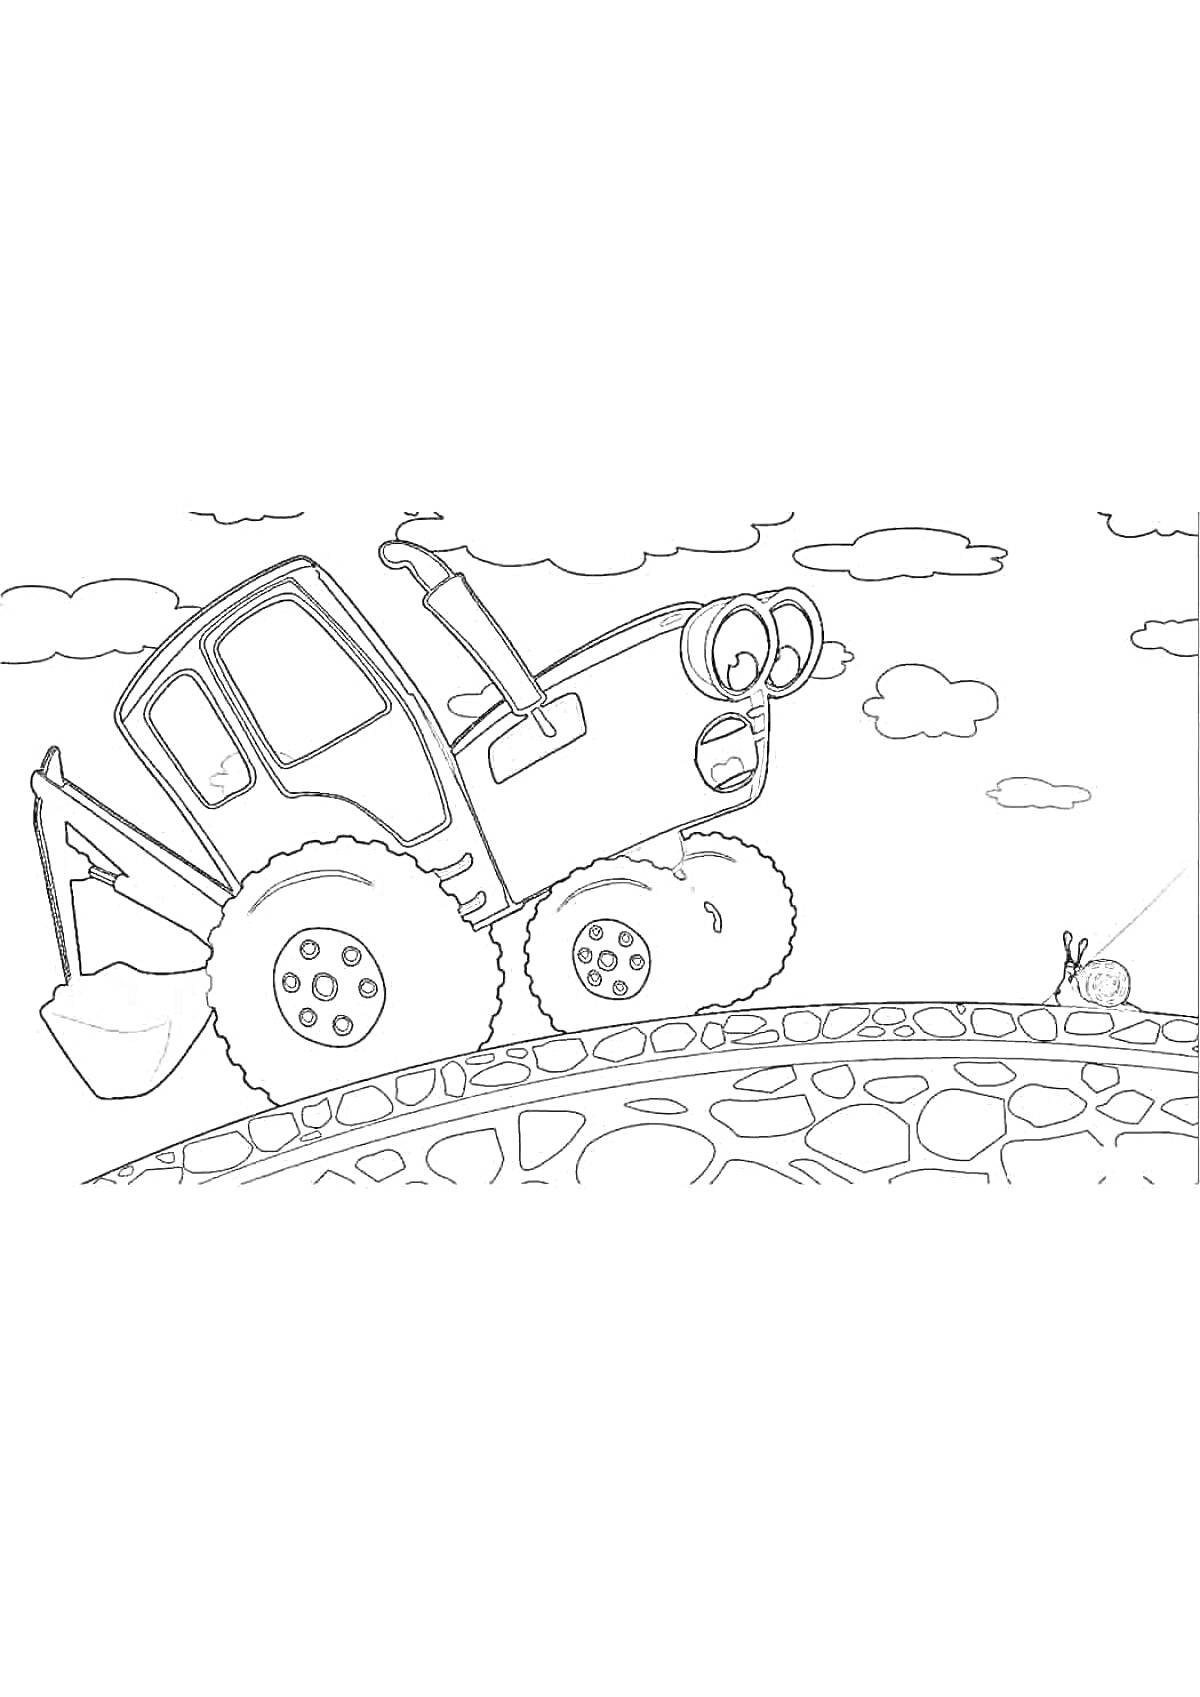 На раскраске изображено: Синий трактор, Трактор, Ковш, Кролик, Облака, Копание, Транспорт, Тяжелая техника